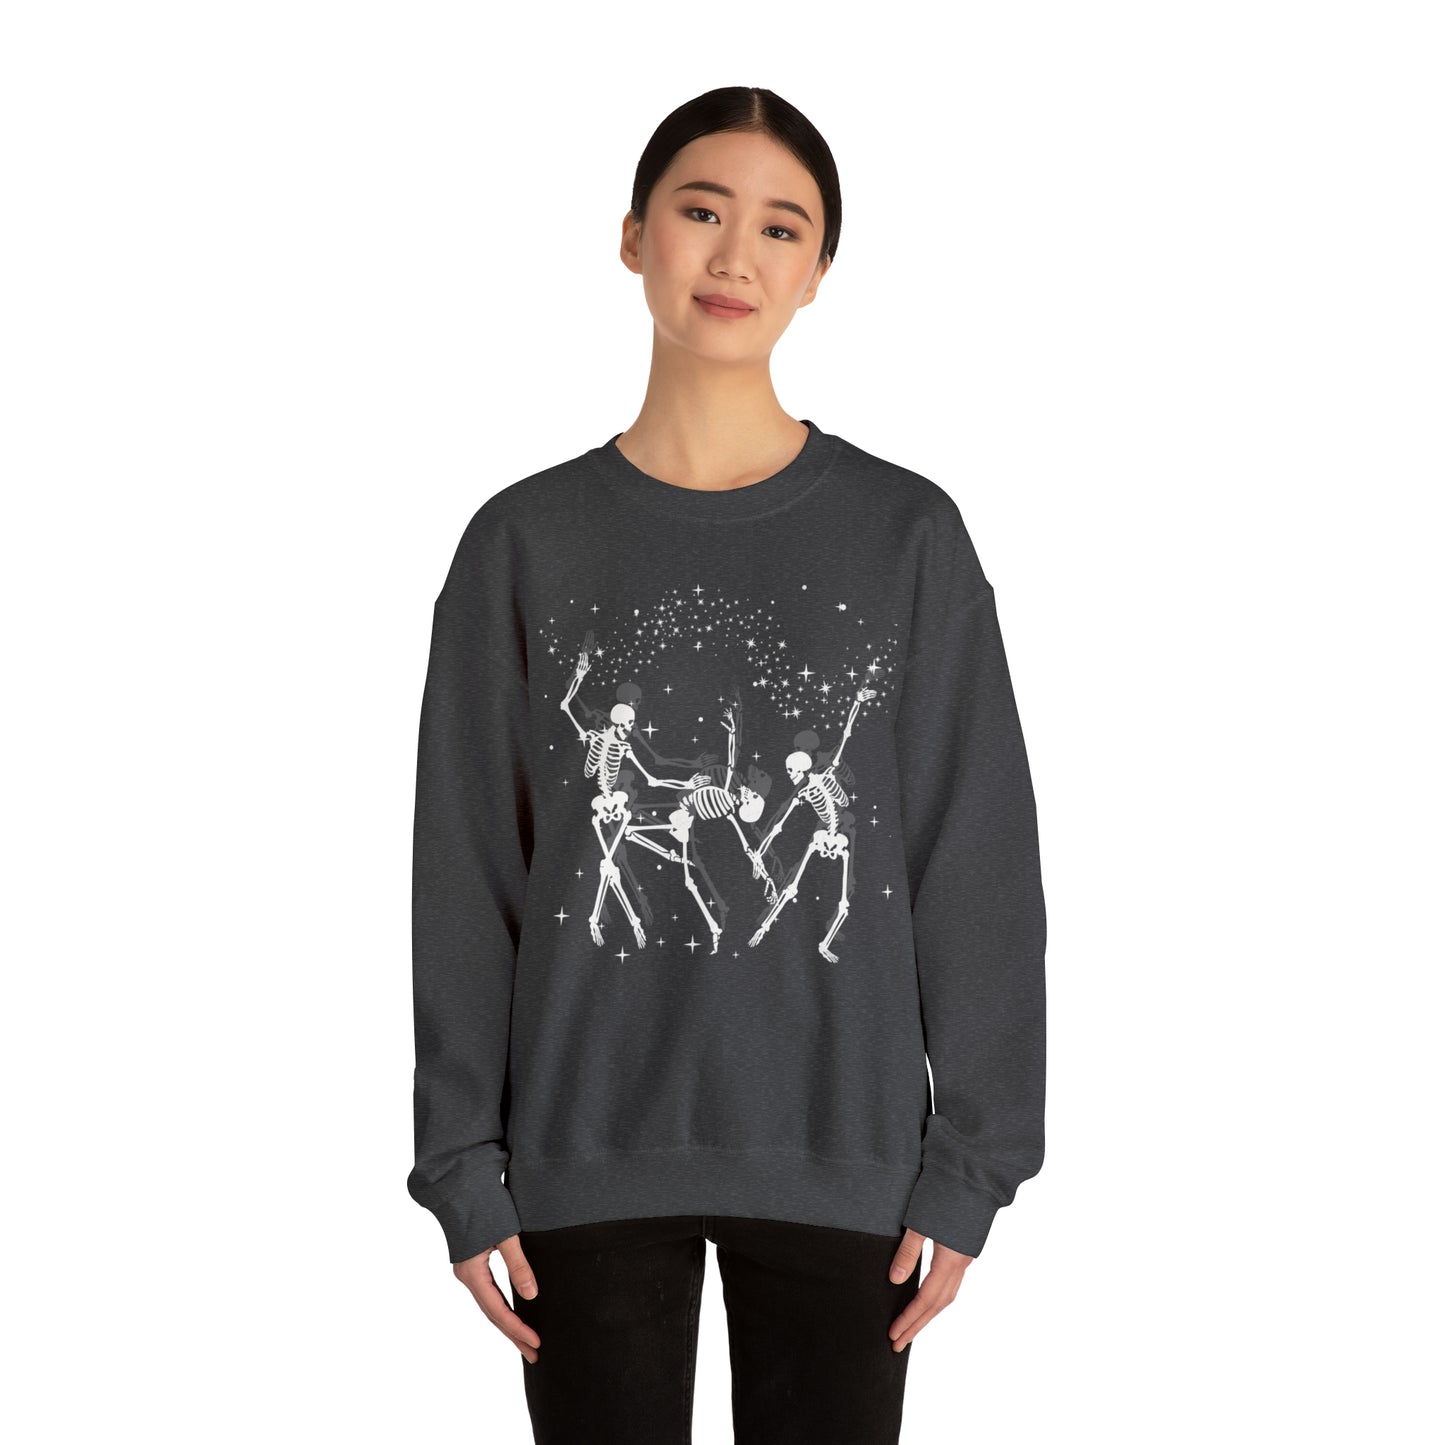 Adult "Dancing Skeletons" Unisex Crewneck Sweatshirt